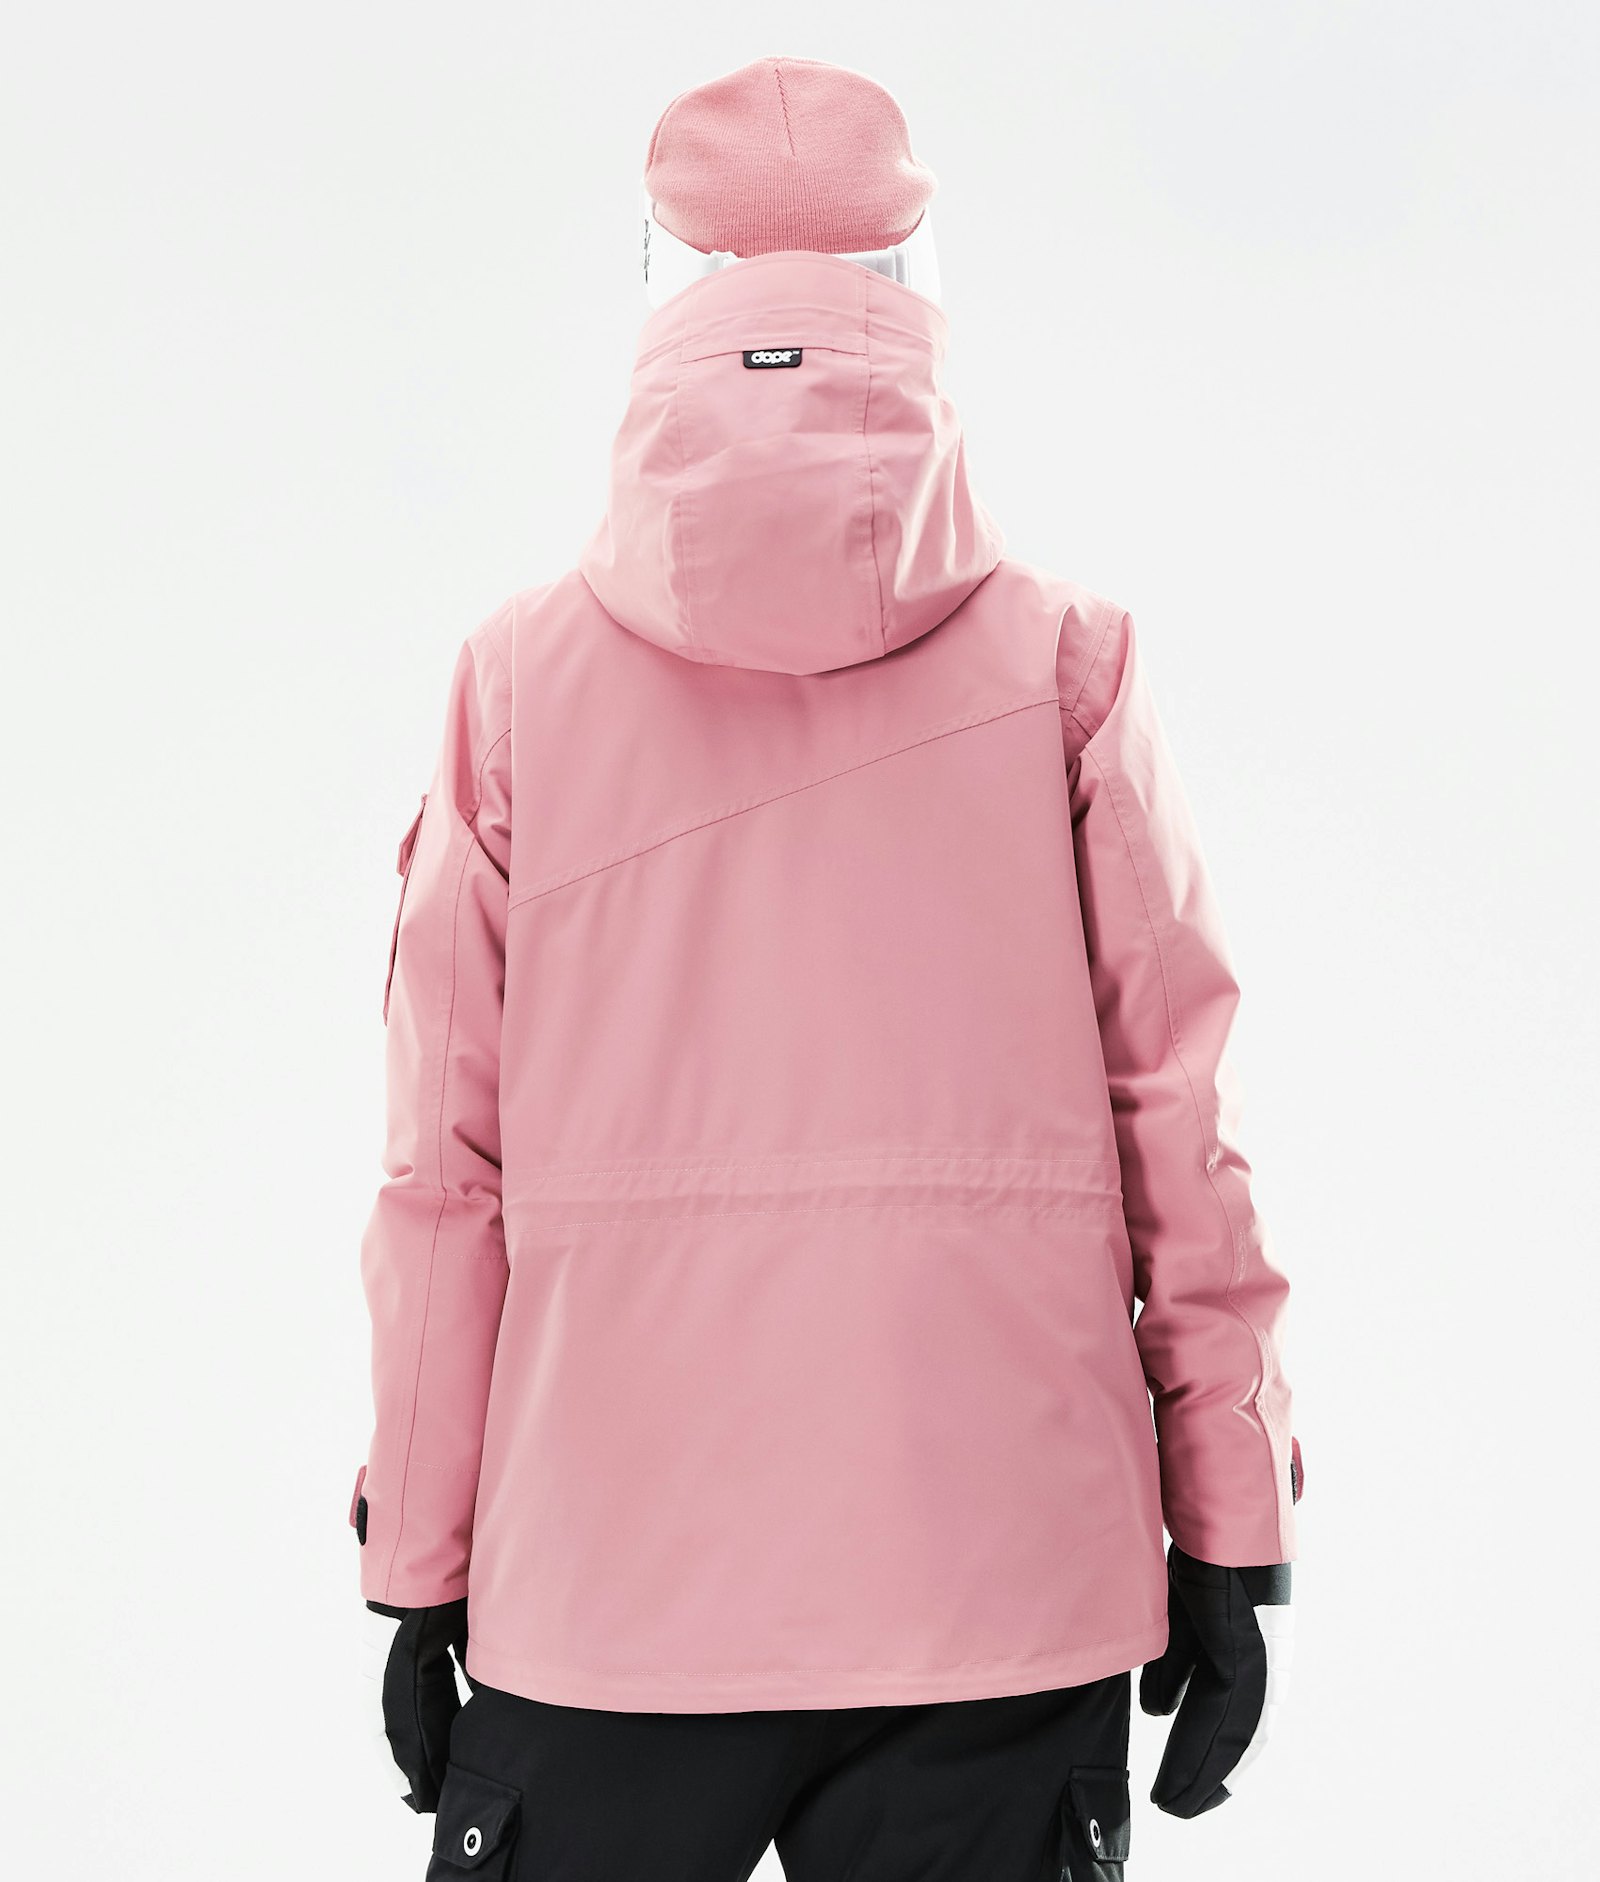 Adept W 2021 Snowboard Jacket Women Pink